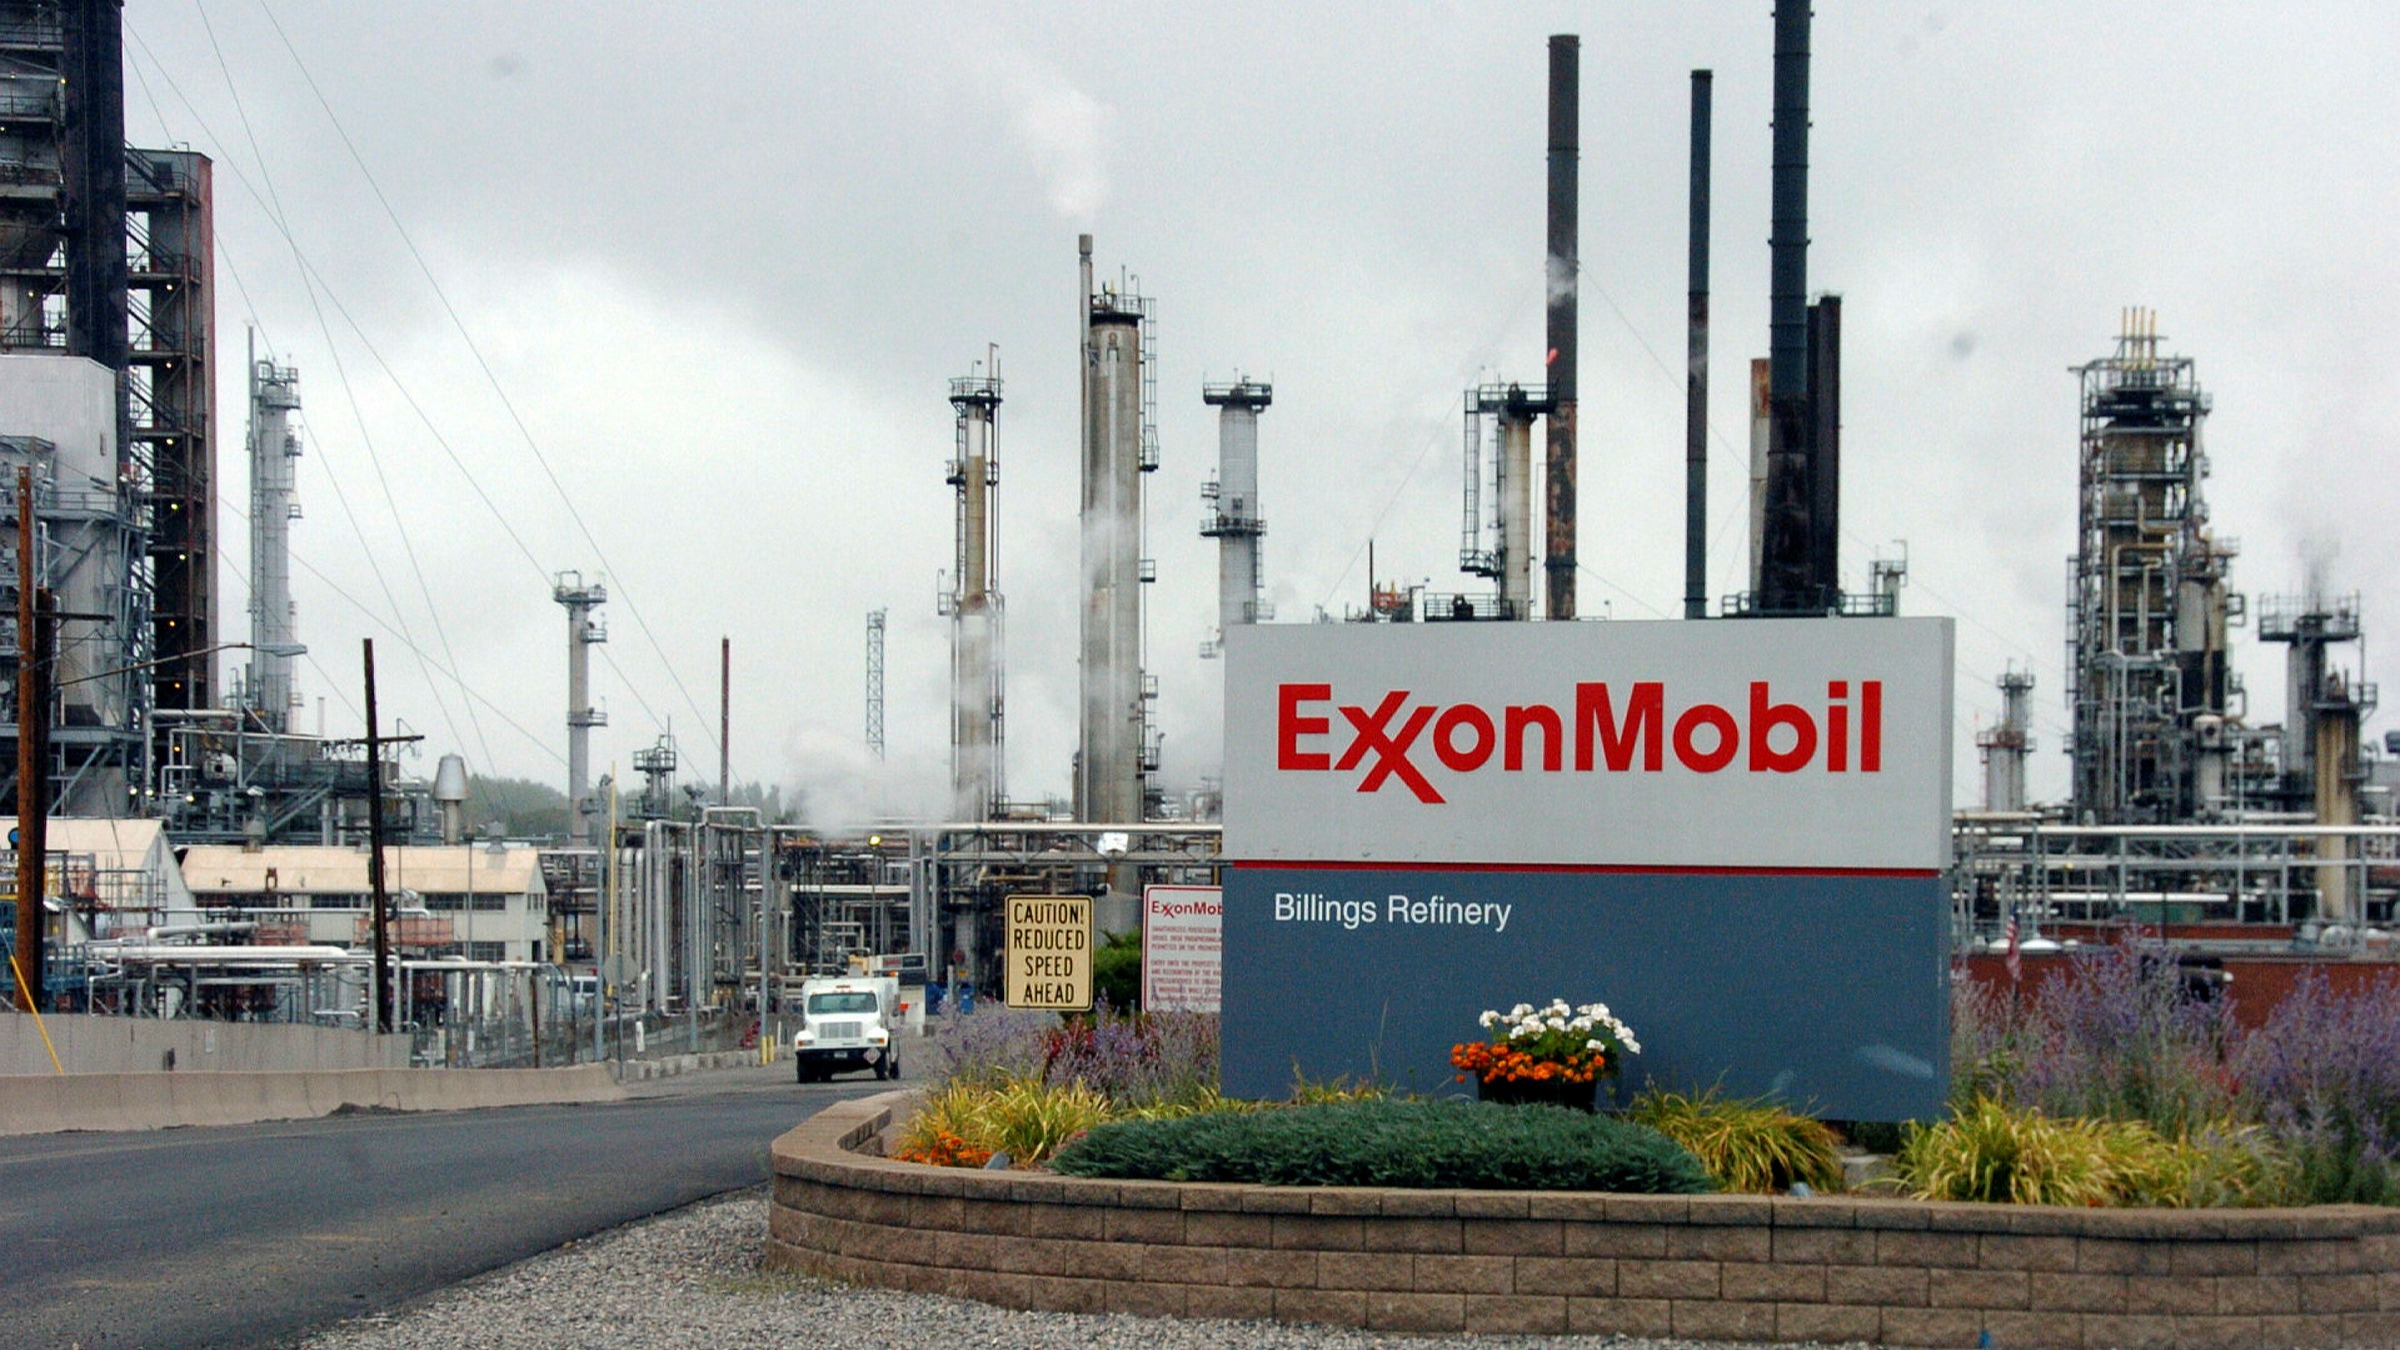 Exxon Mobil. Image source: https://images.app.goo.gl/vXW2hQdiDtiK9joWA